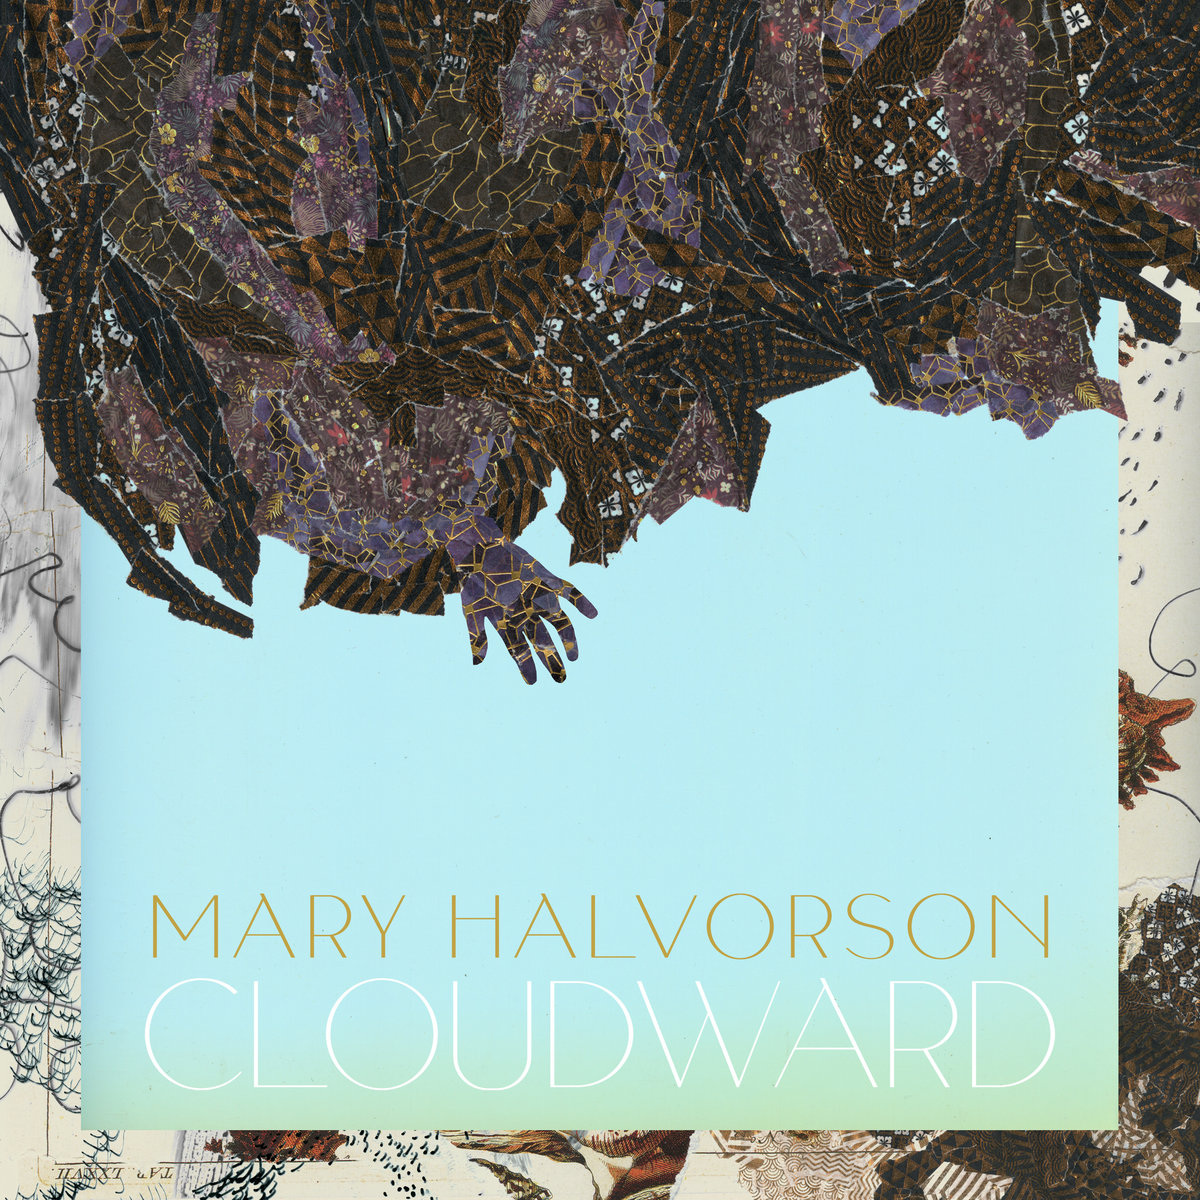 Cloudward
by Mary Halvorson